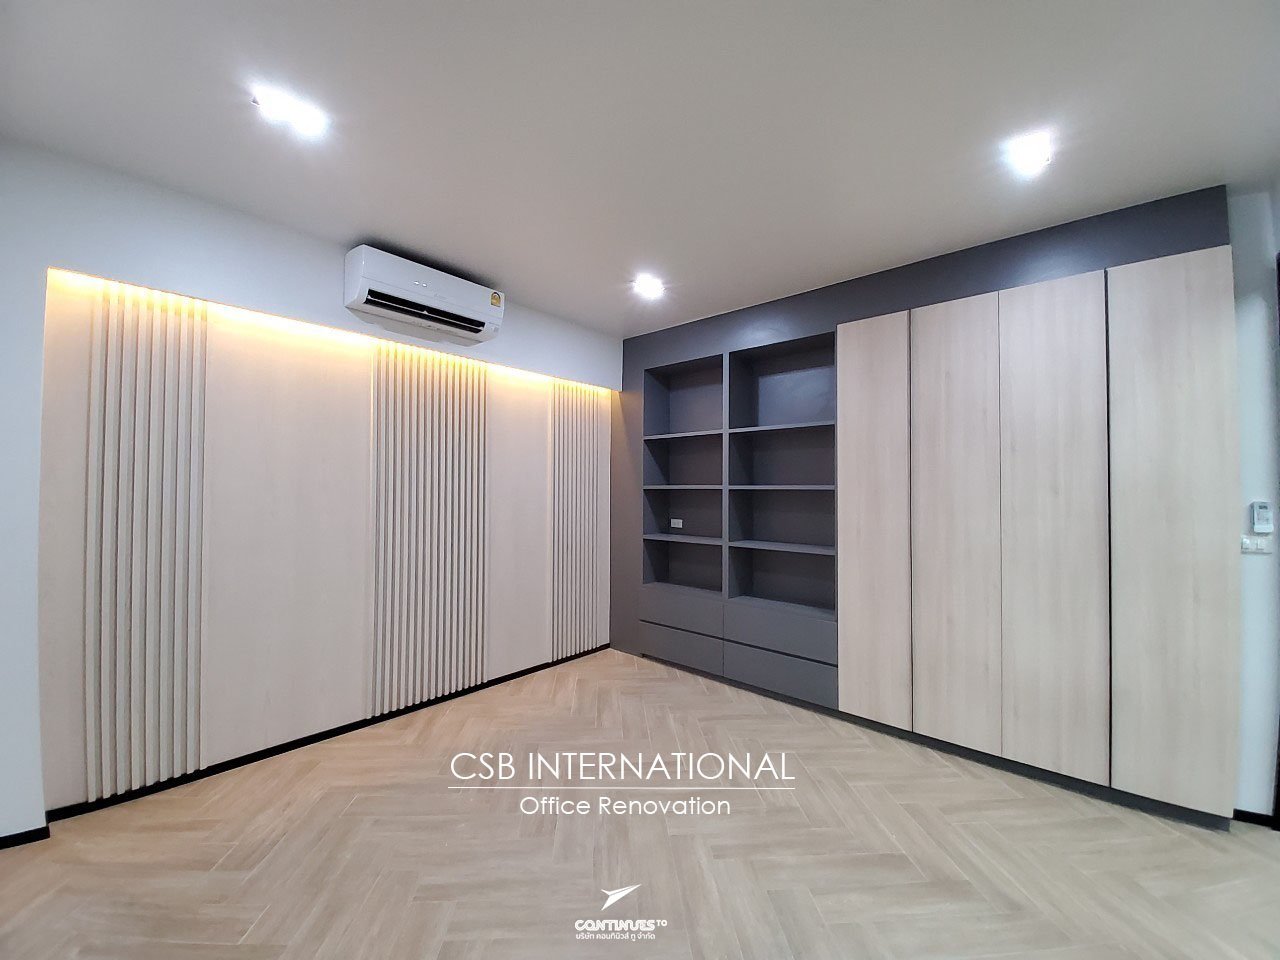 CSB INTERNATIONAL